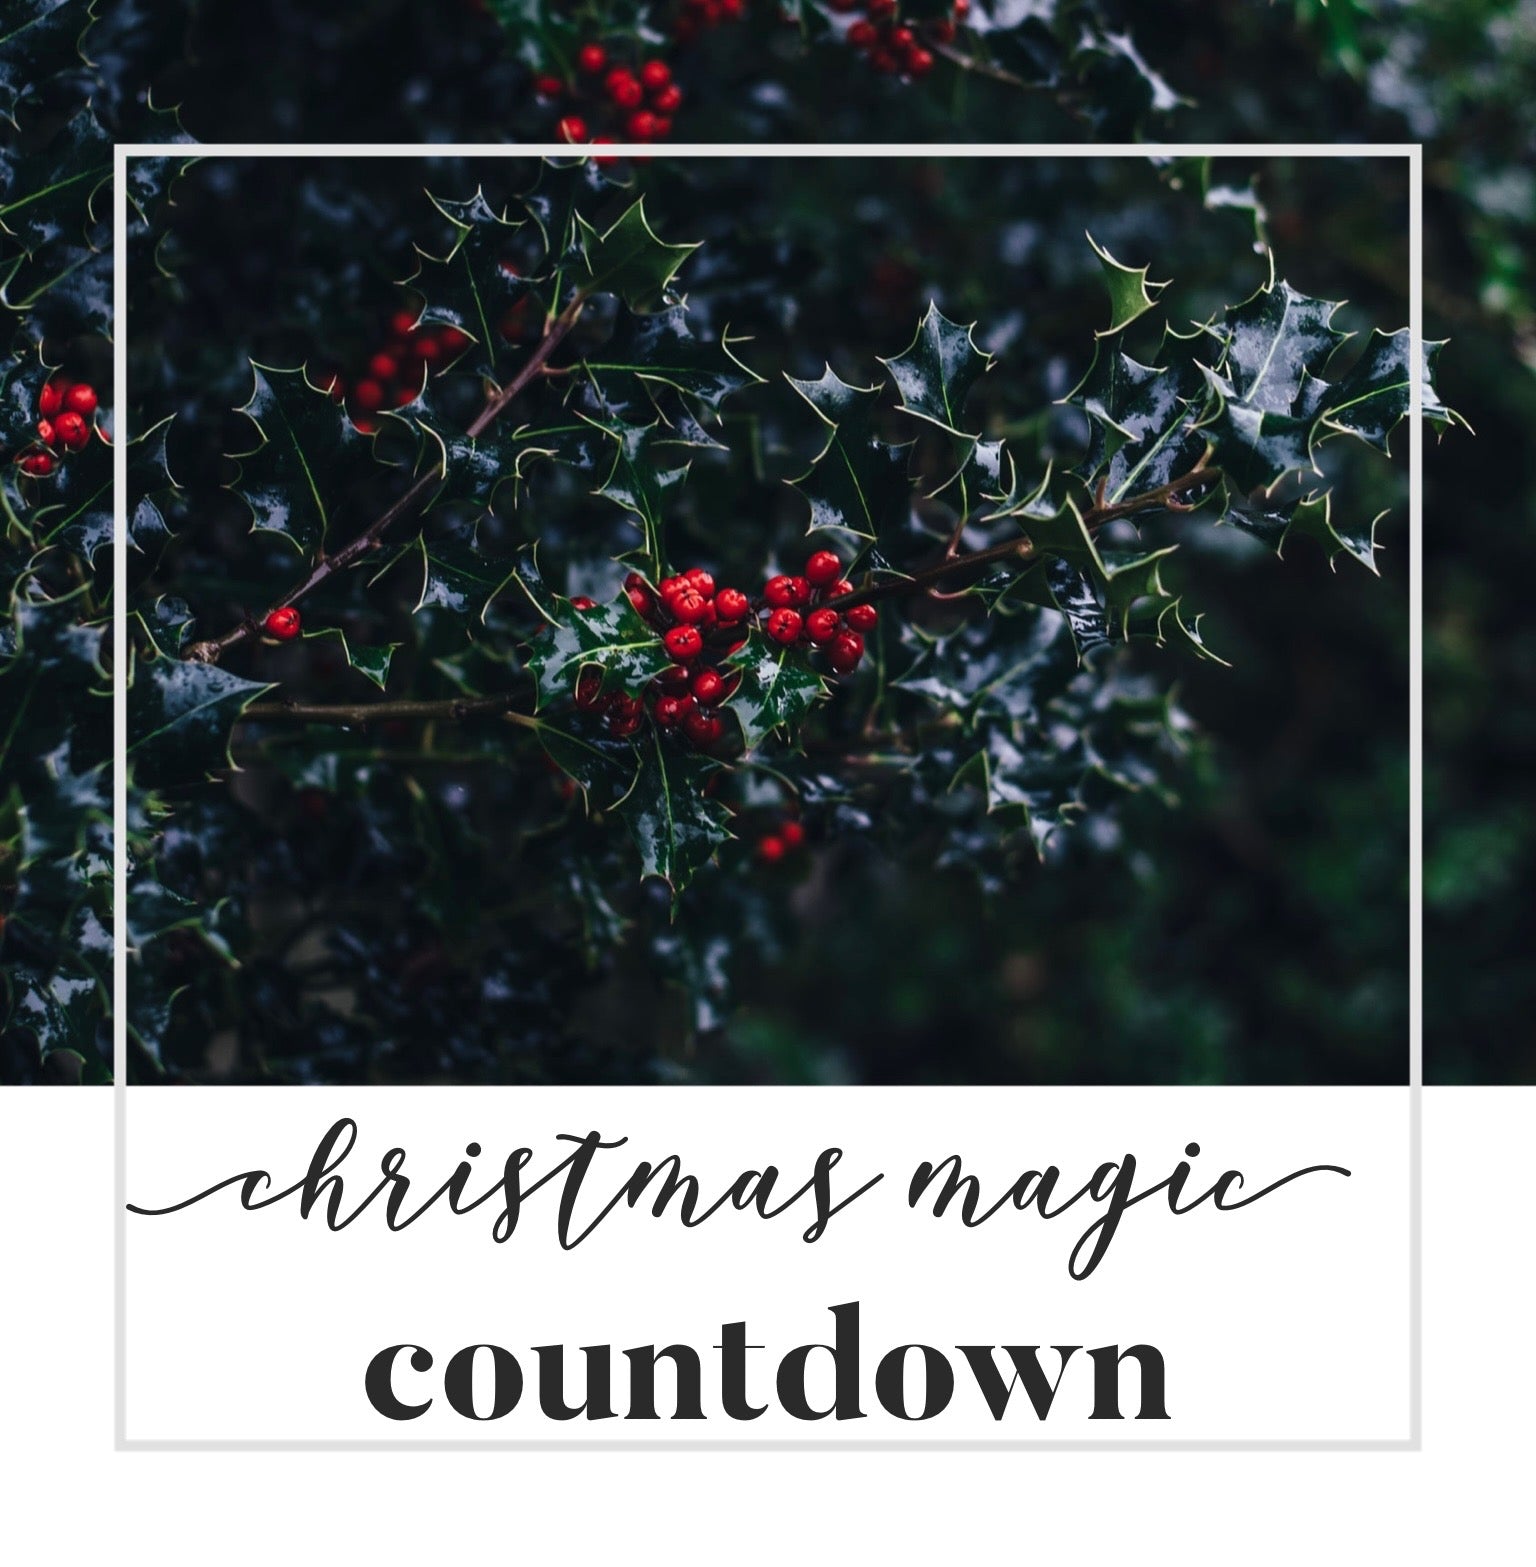 The 12 Days Christmas Magic Countdown